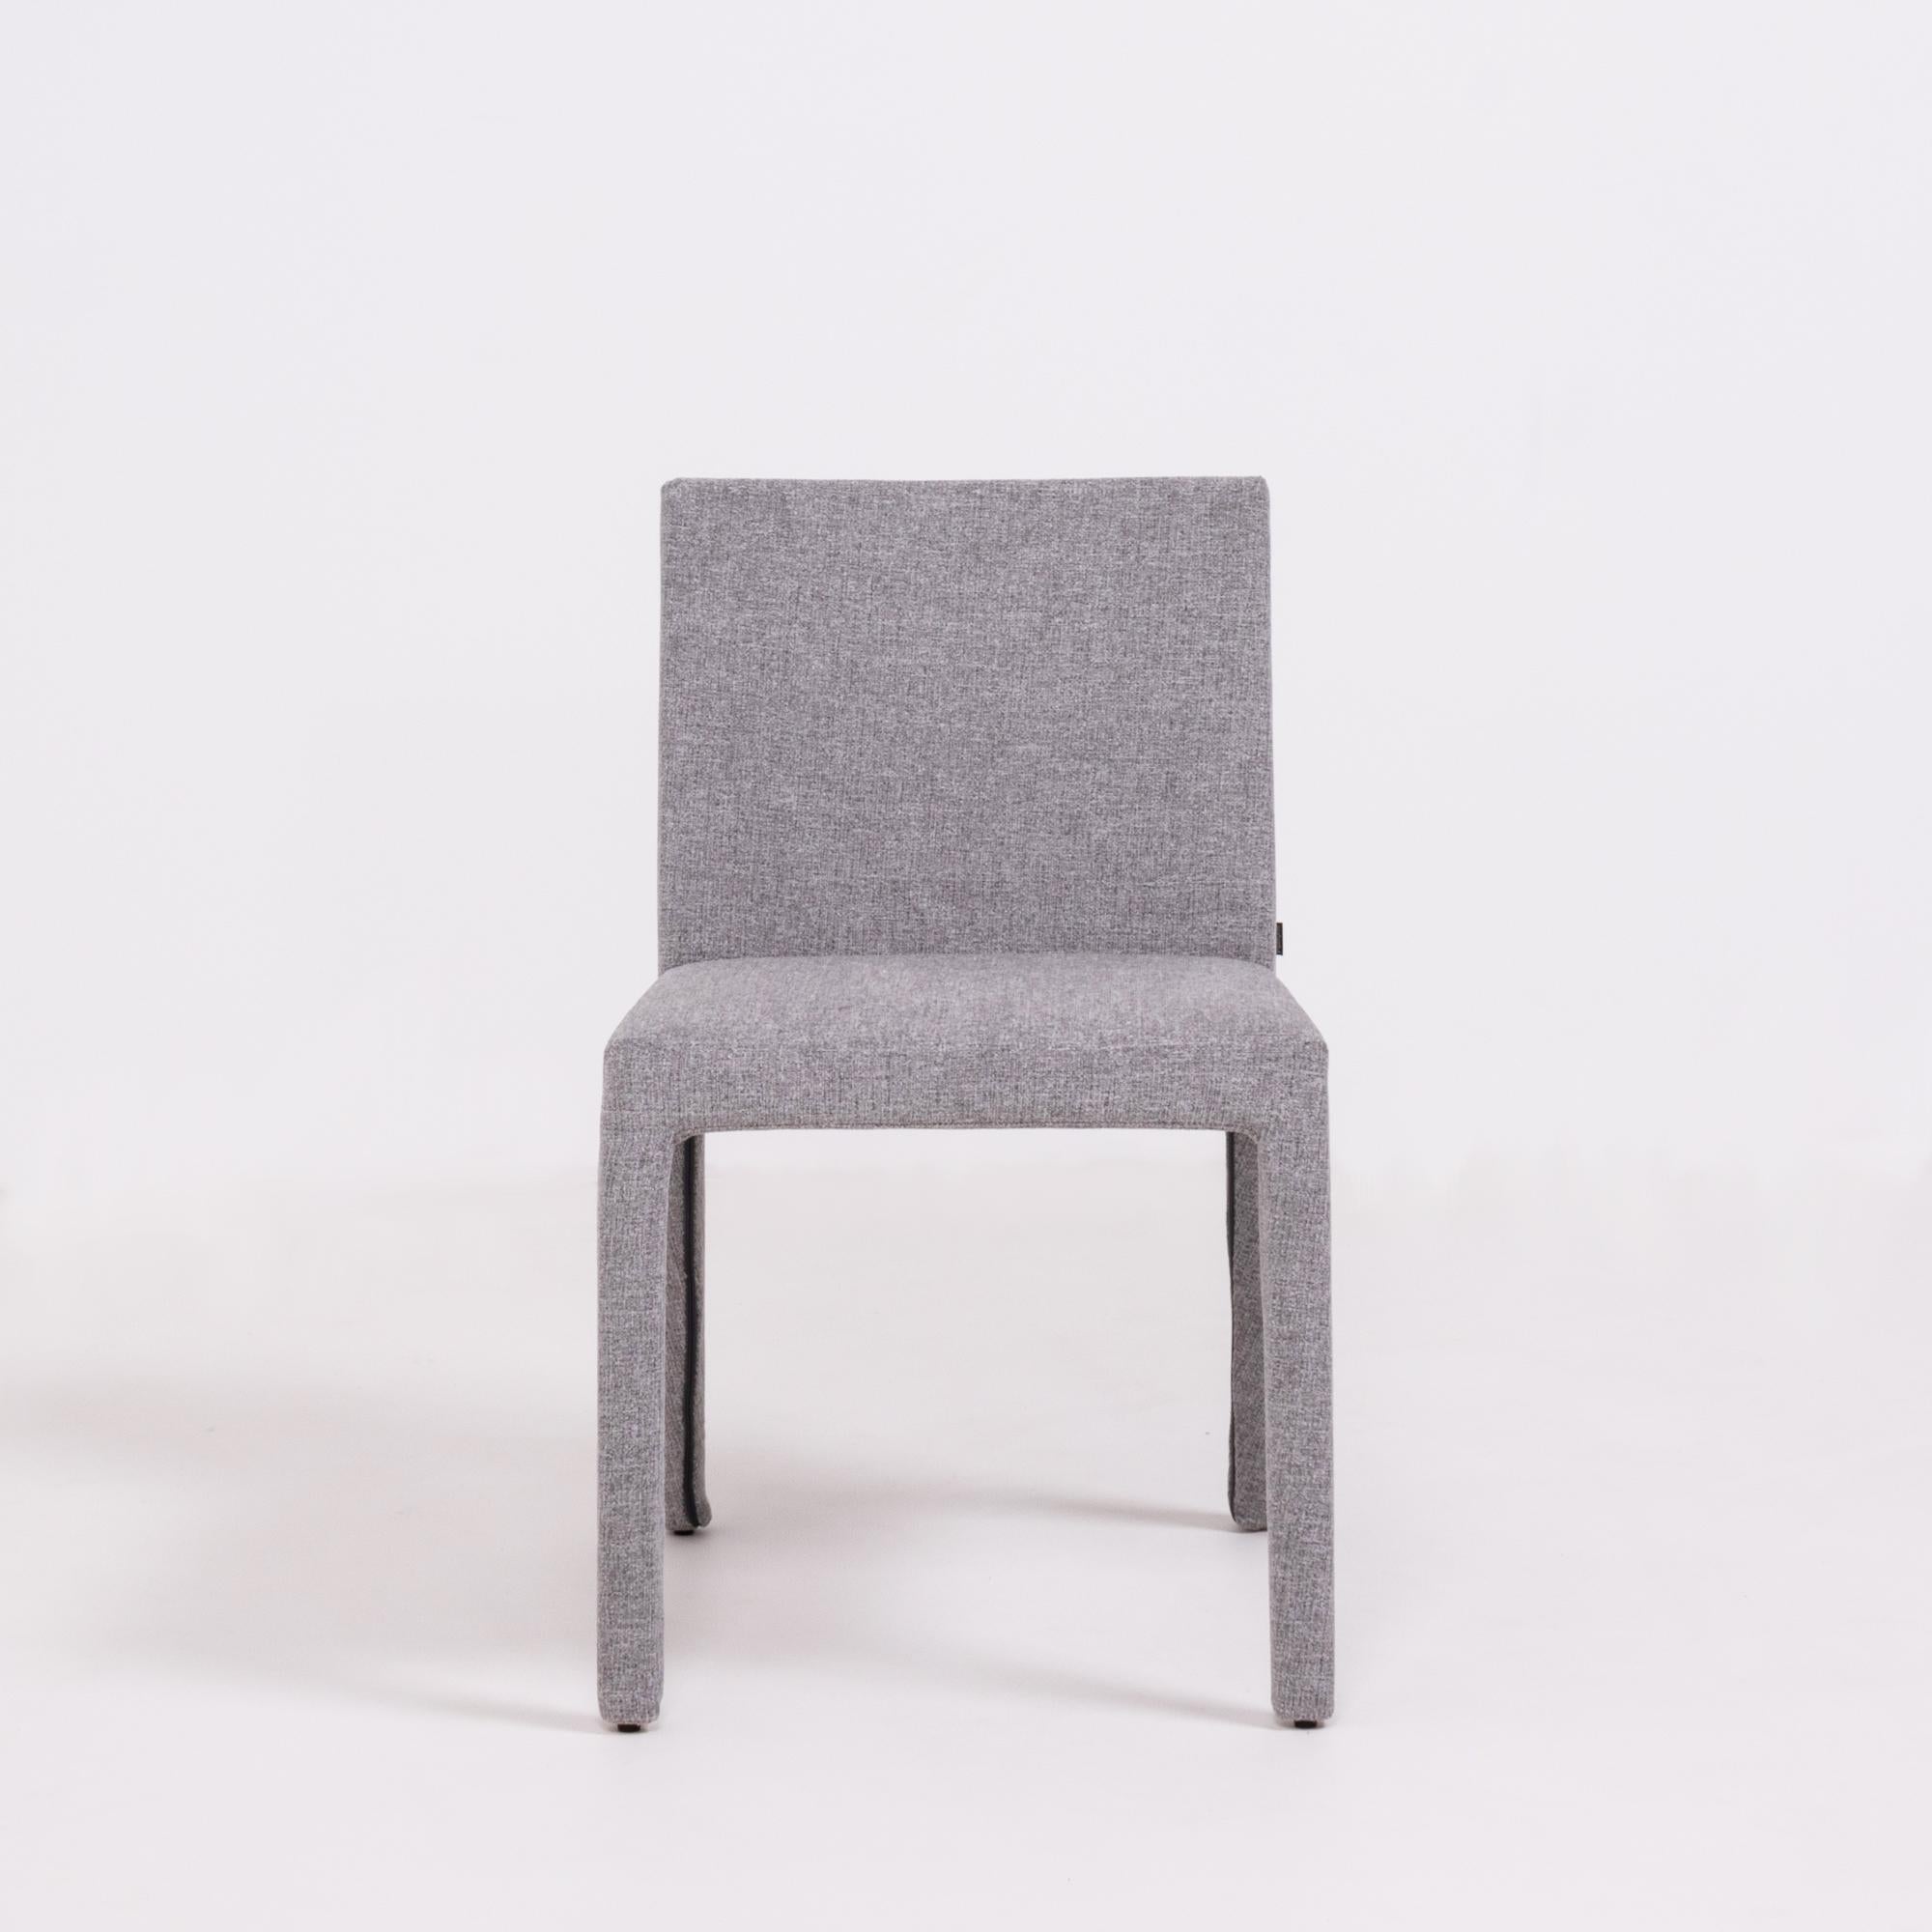 modern grey dining chairs